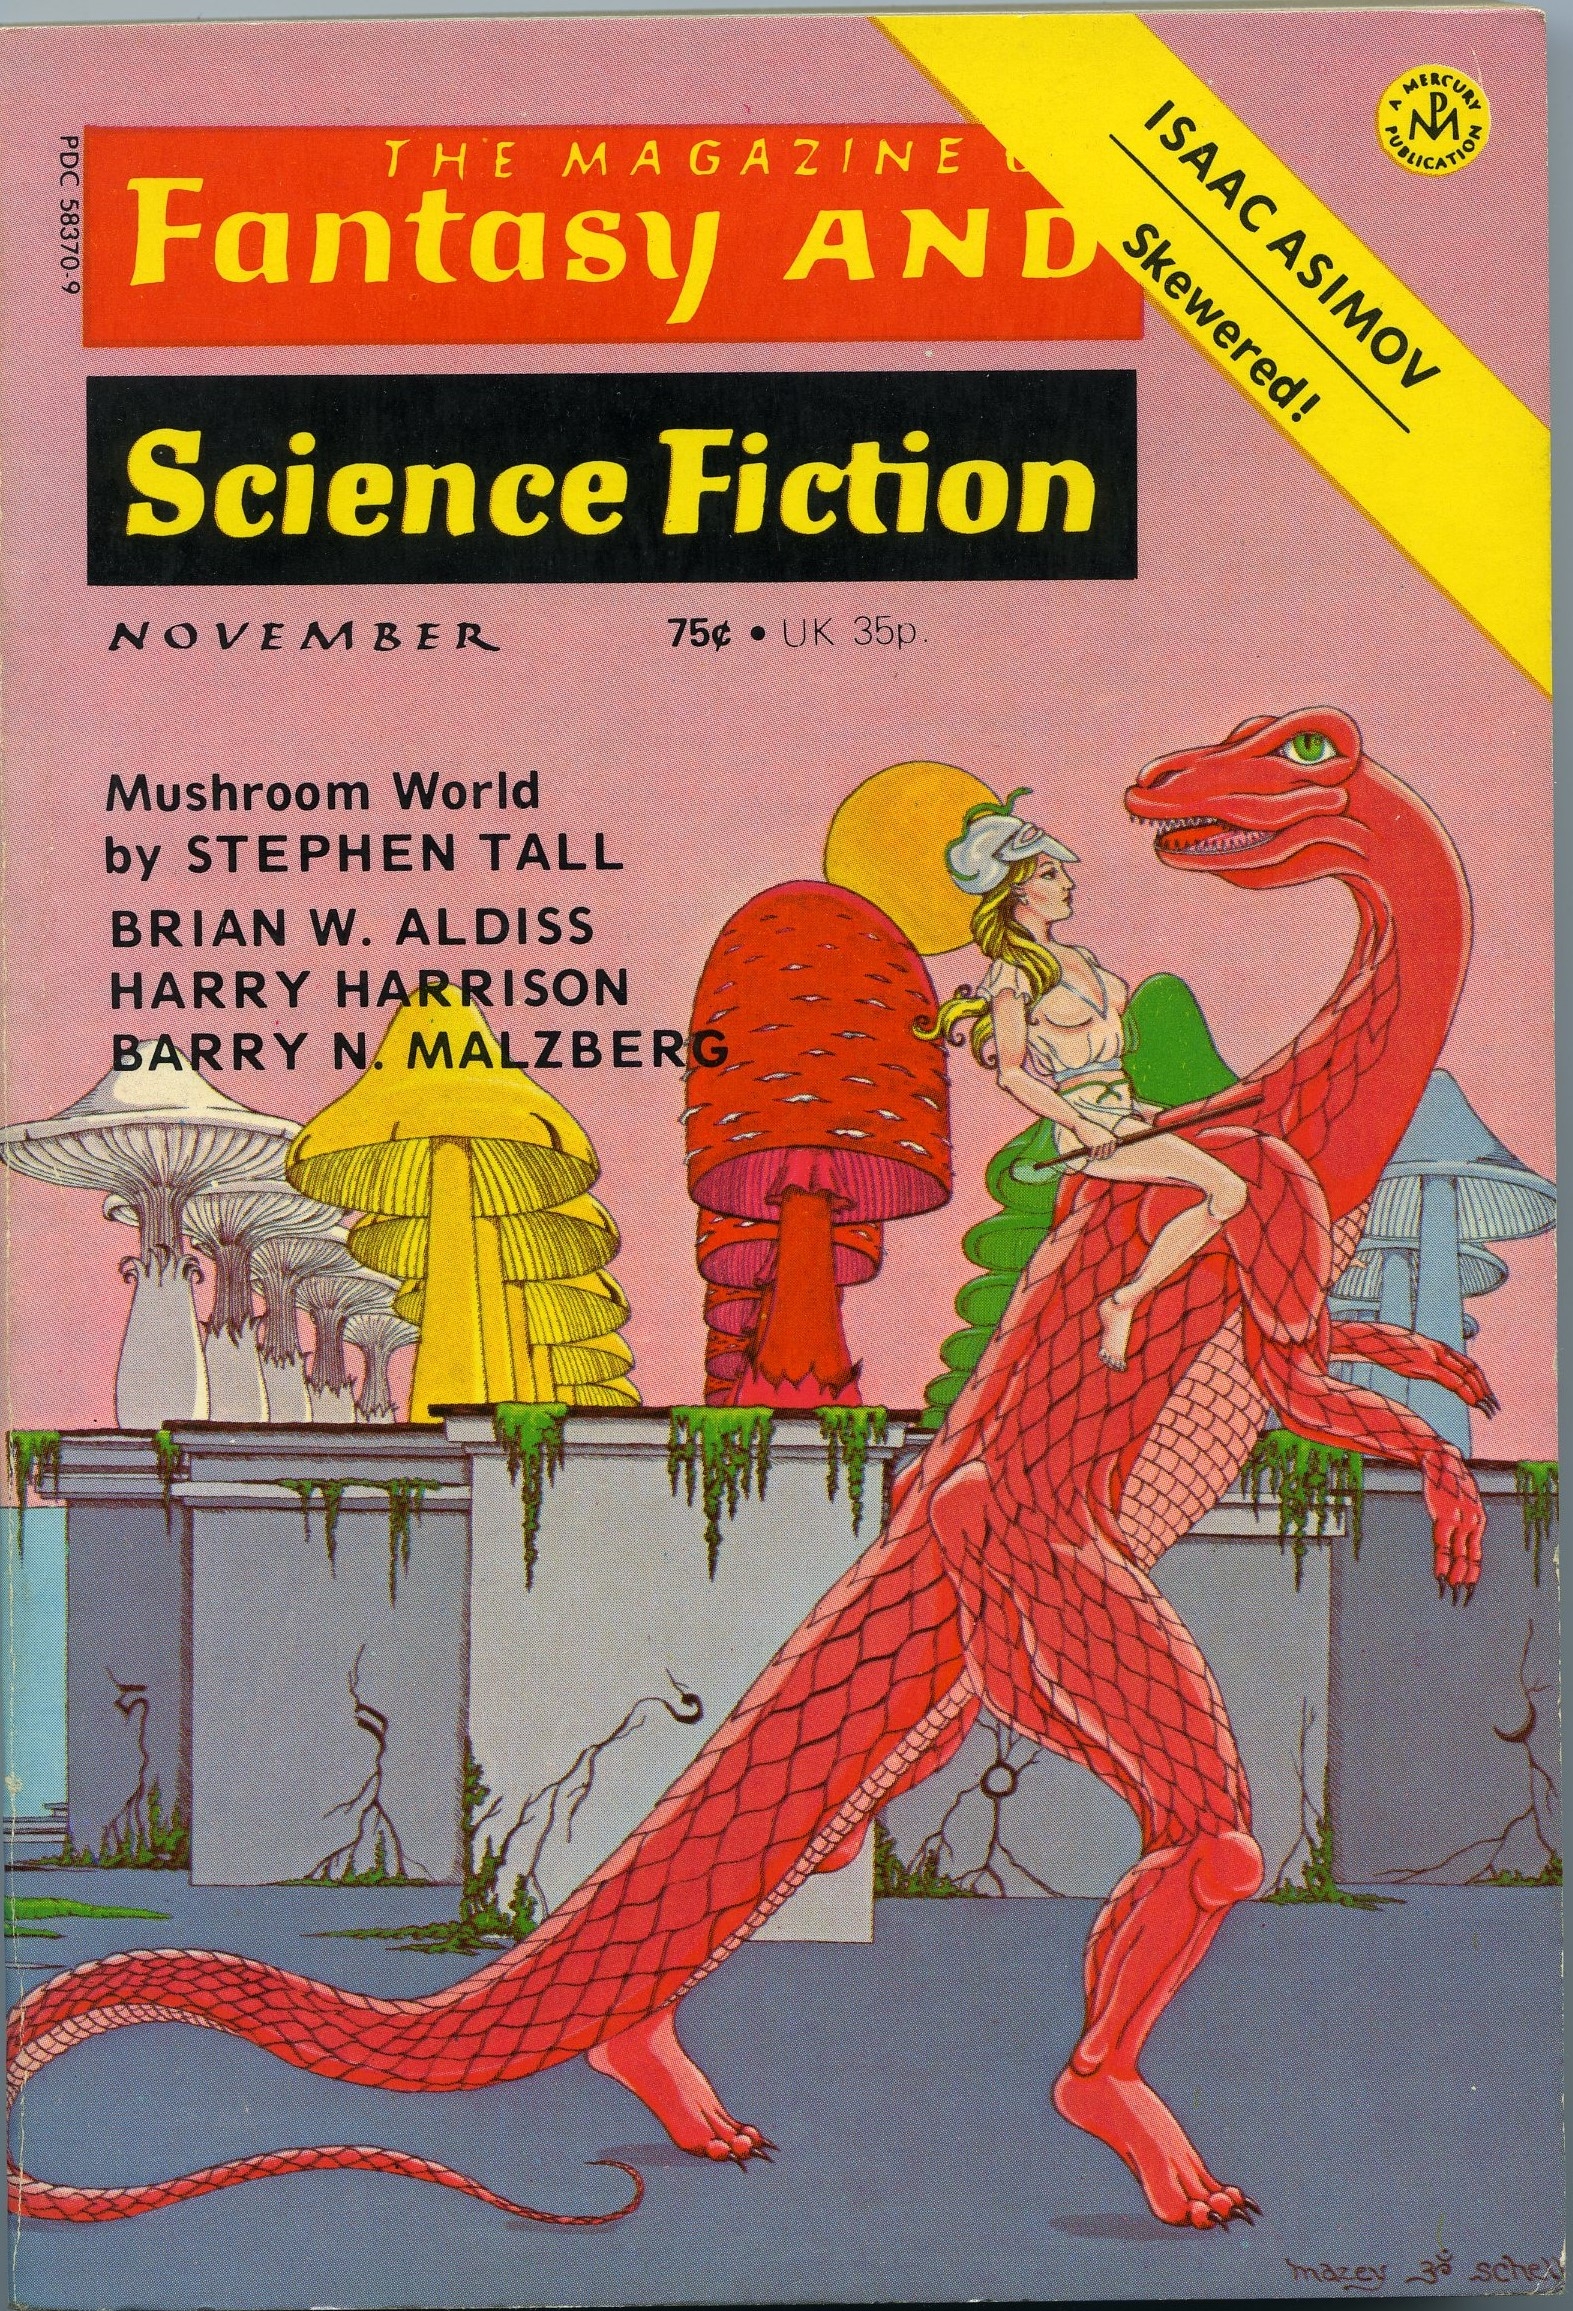 dragon on magazine cover